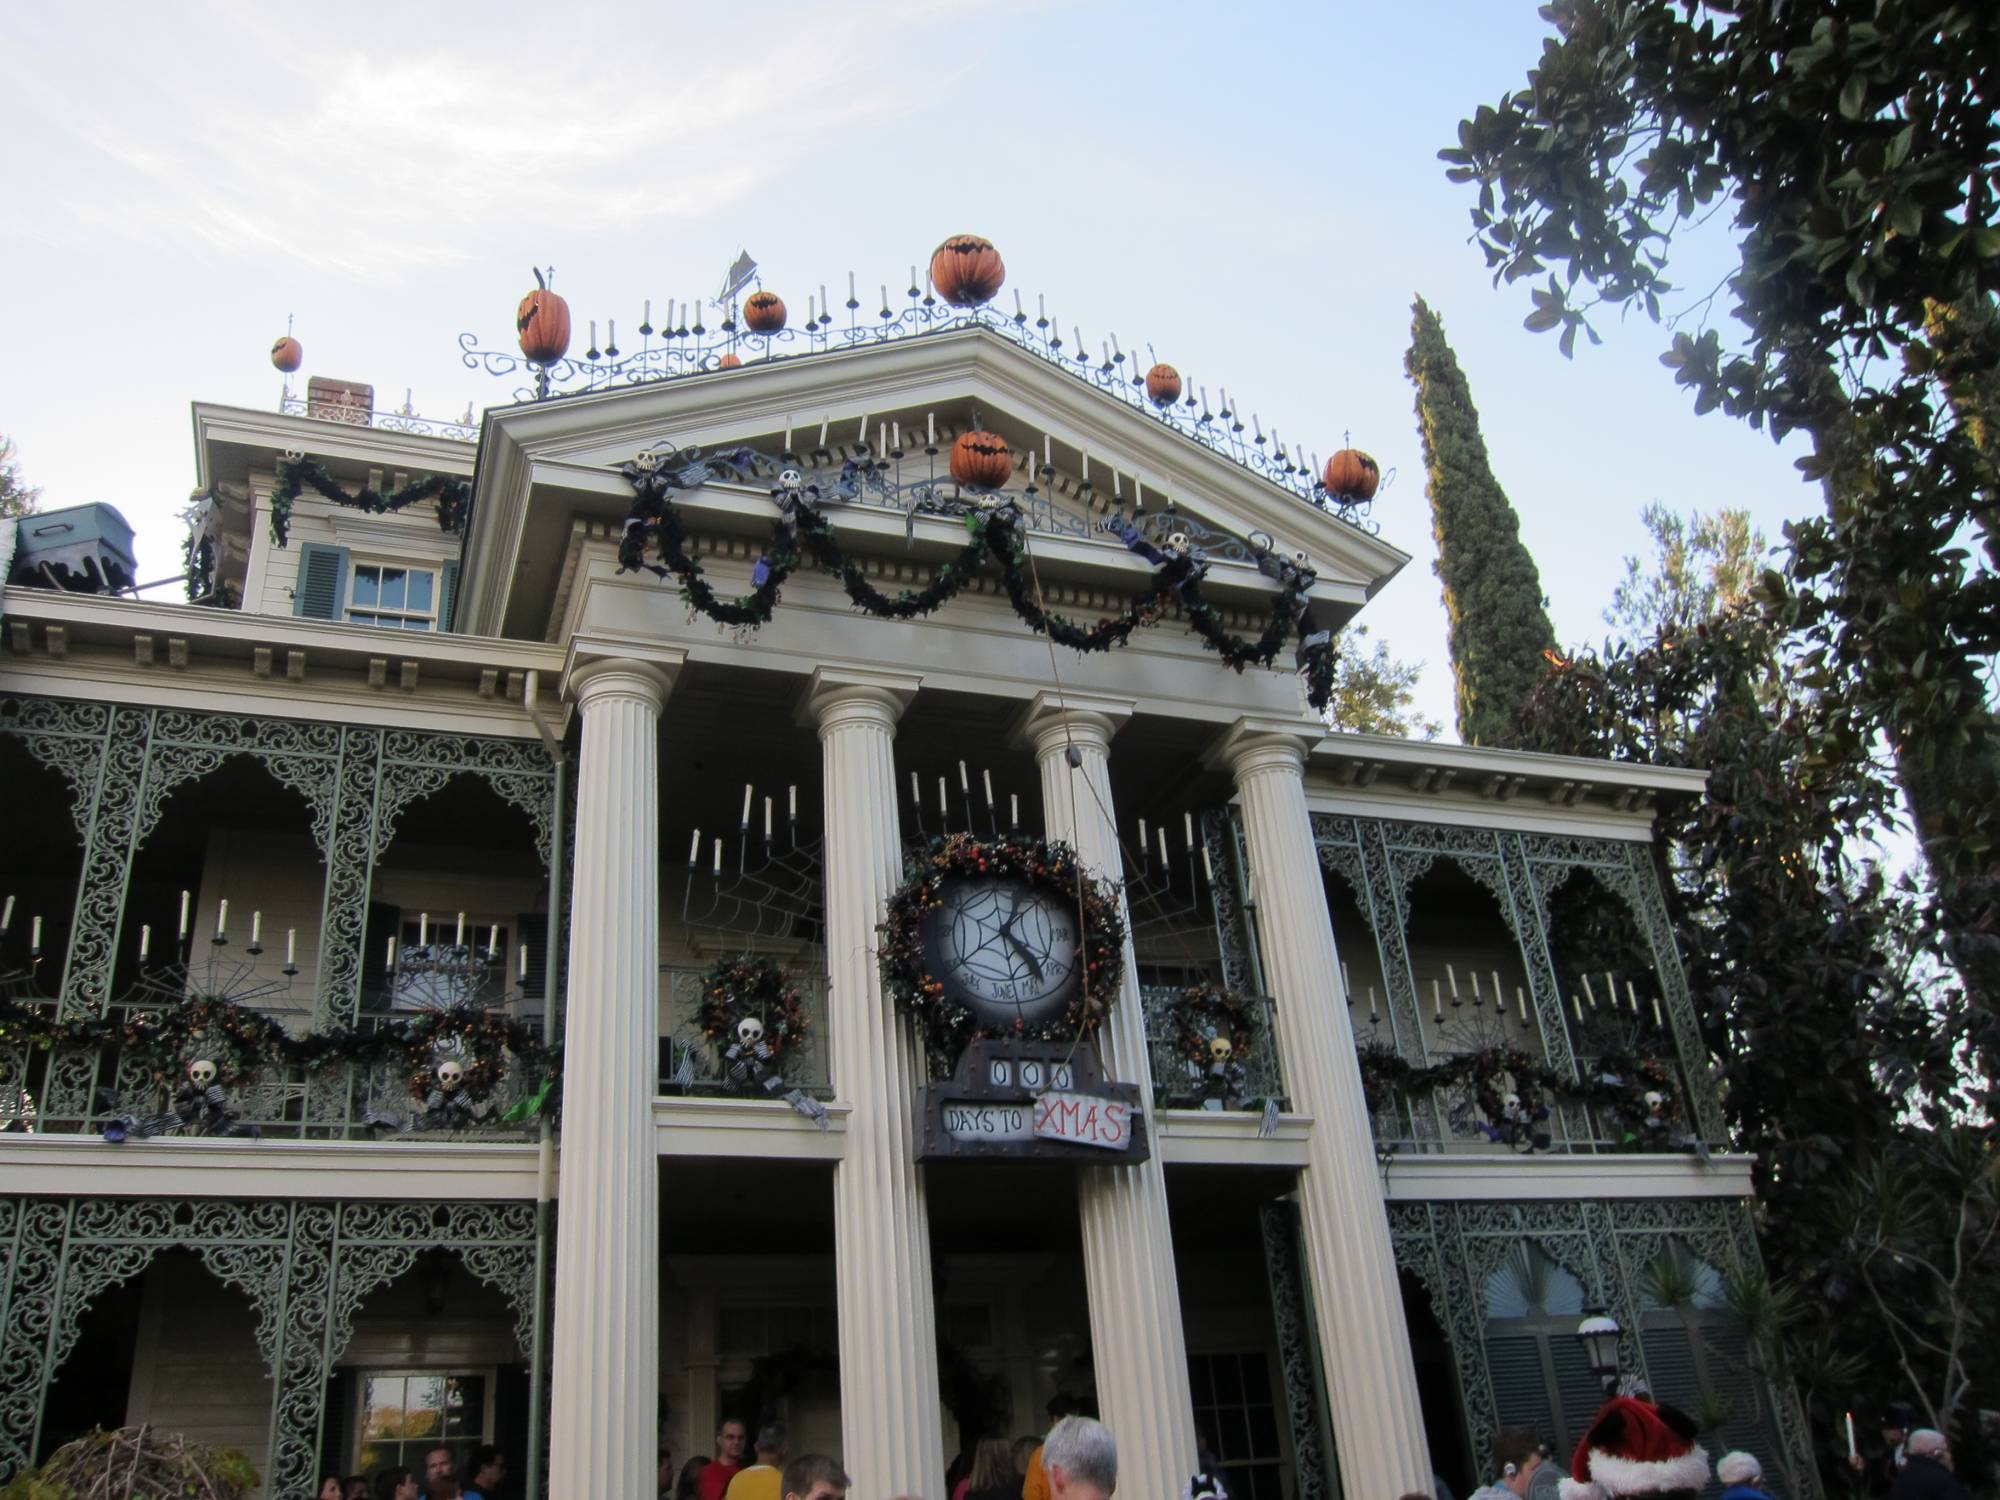 Explore the magic of the holiday season at Disneyland |PassPorter.com